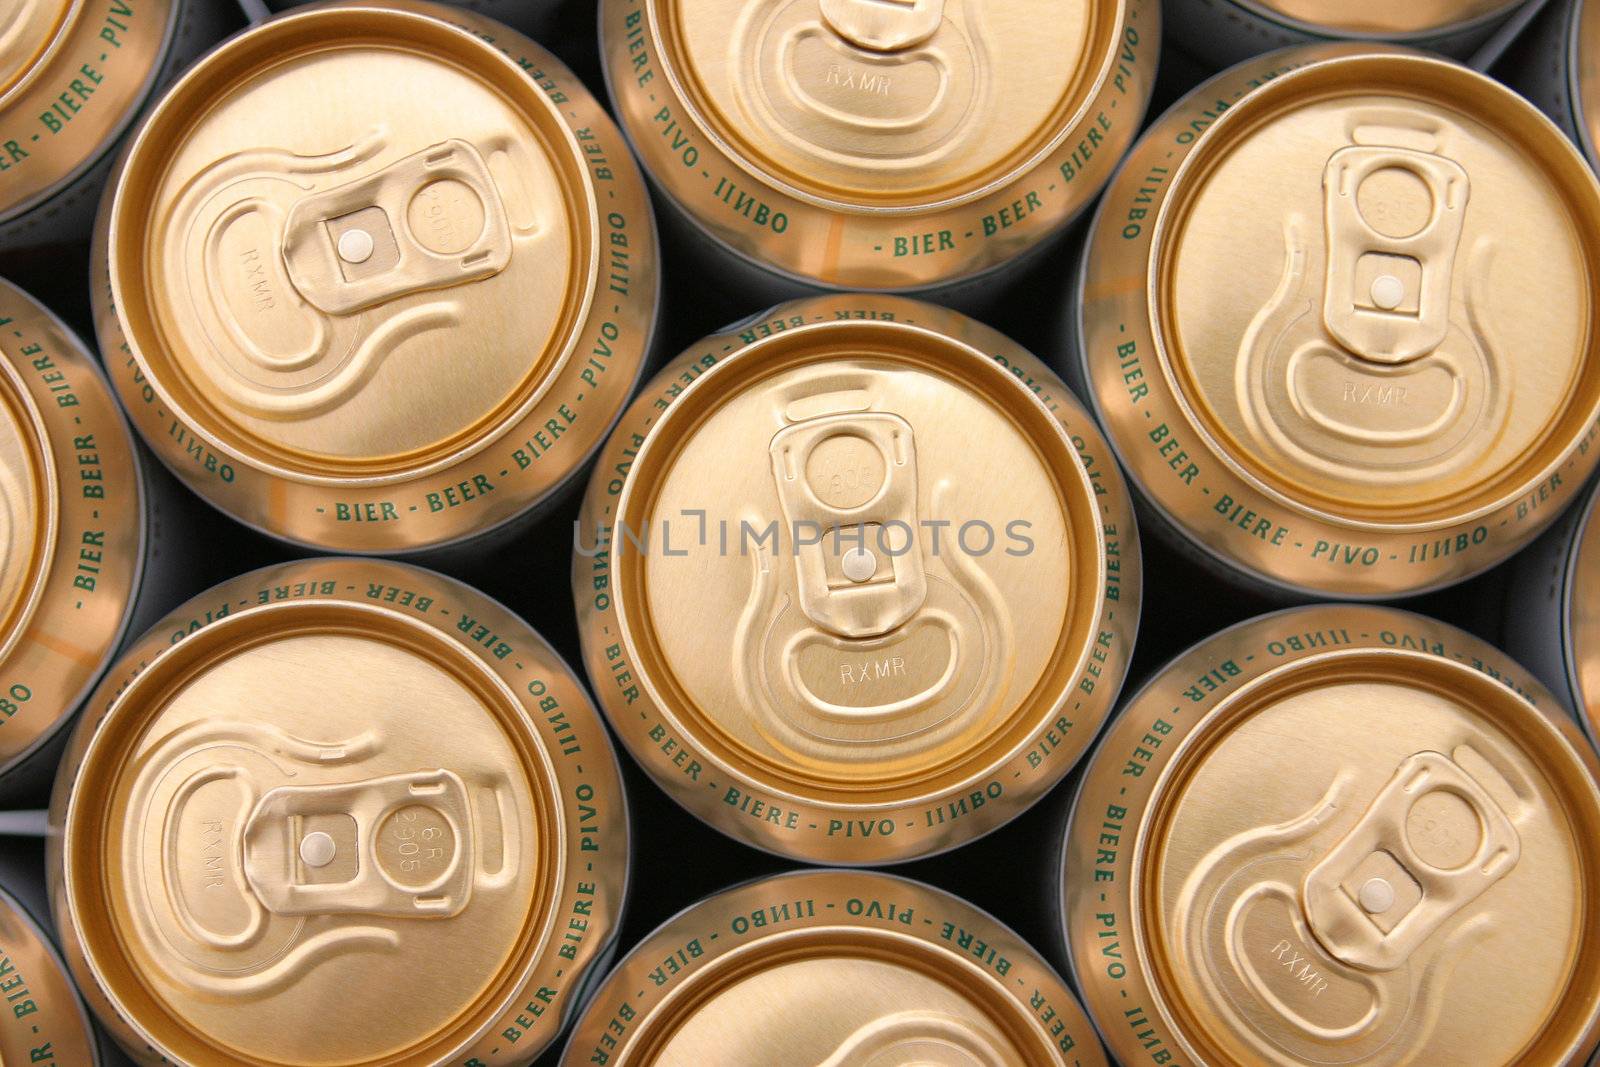 Aluminum cans of Czech beer